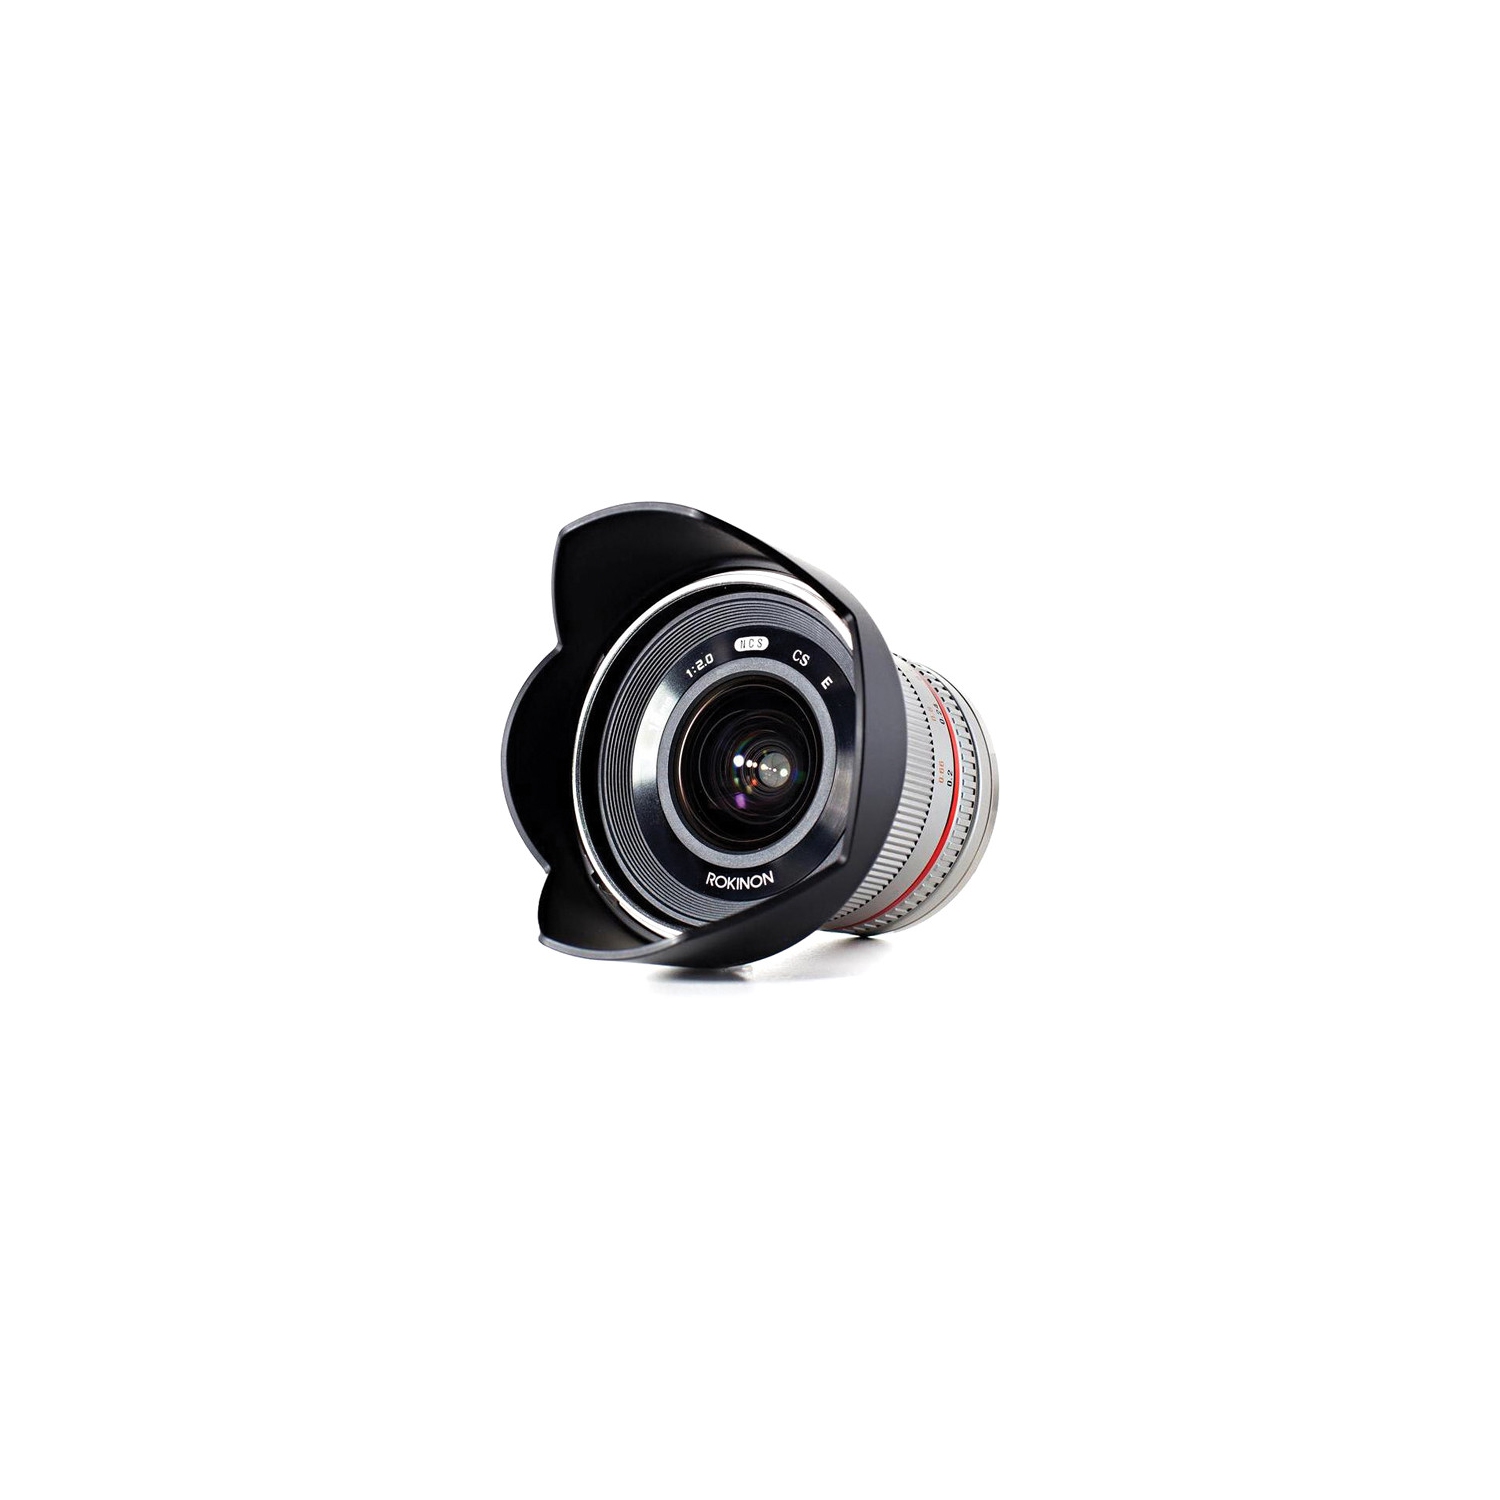 Rokinon 12mm f/2.0 NCS CS Lens for Samsung NX Mount (Silver) - US Version w/ Seller Warranty